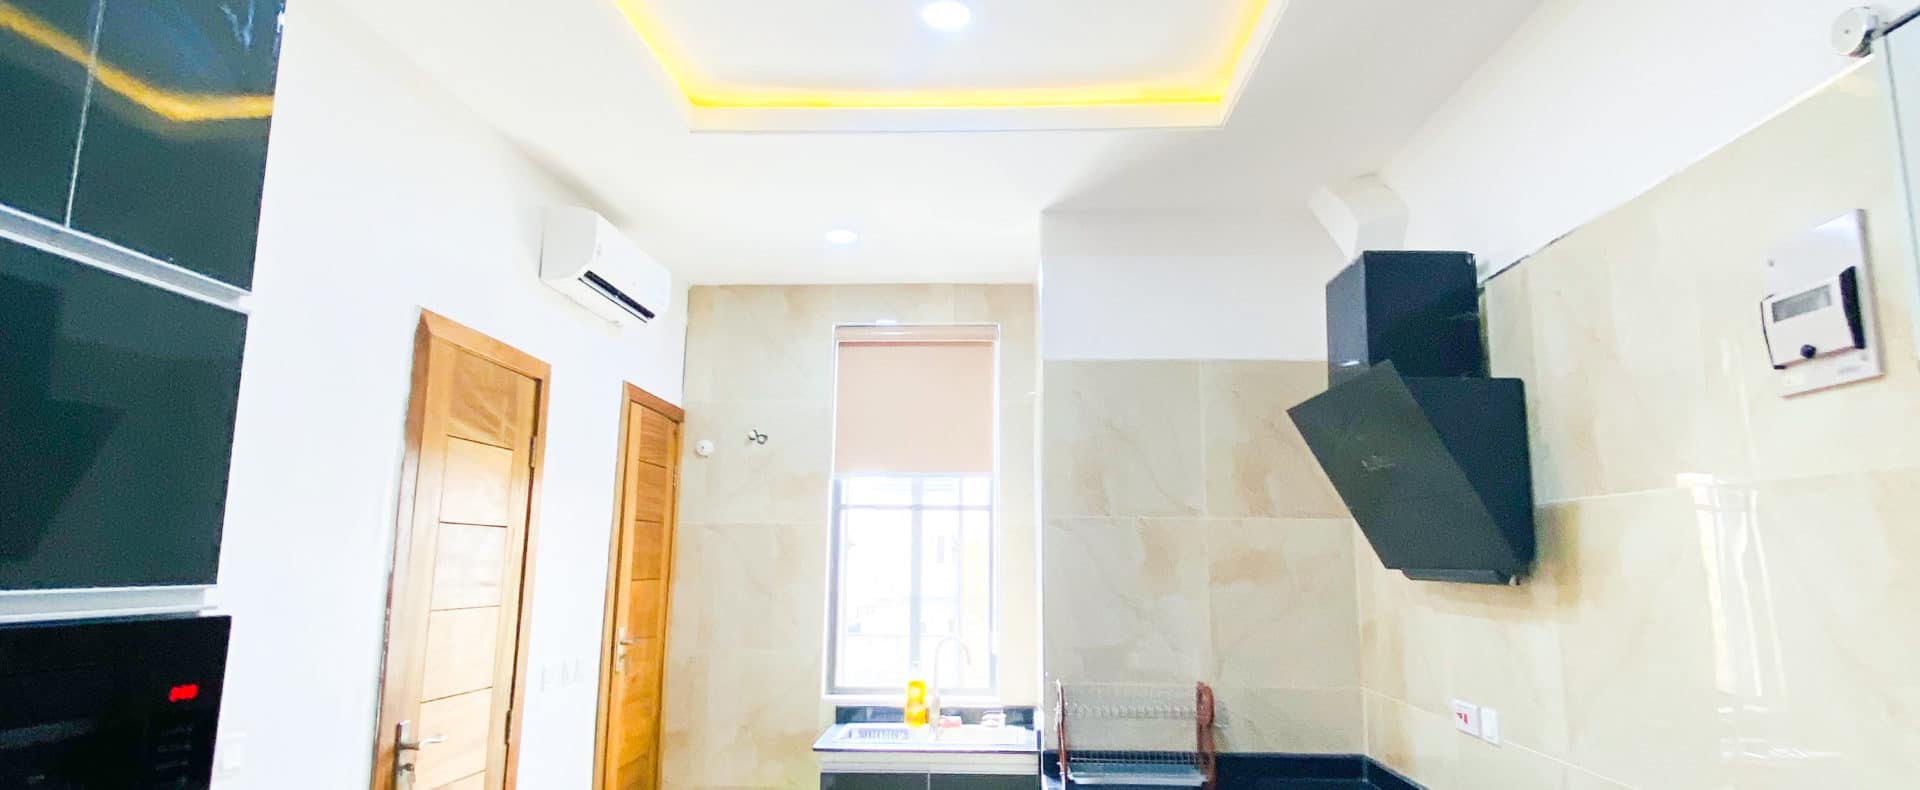 Luxury Private Two Bedroom Apartment In Lekki Short Let In Lagos Nigeria